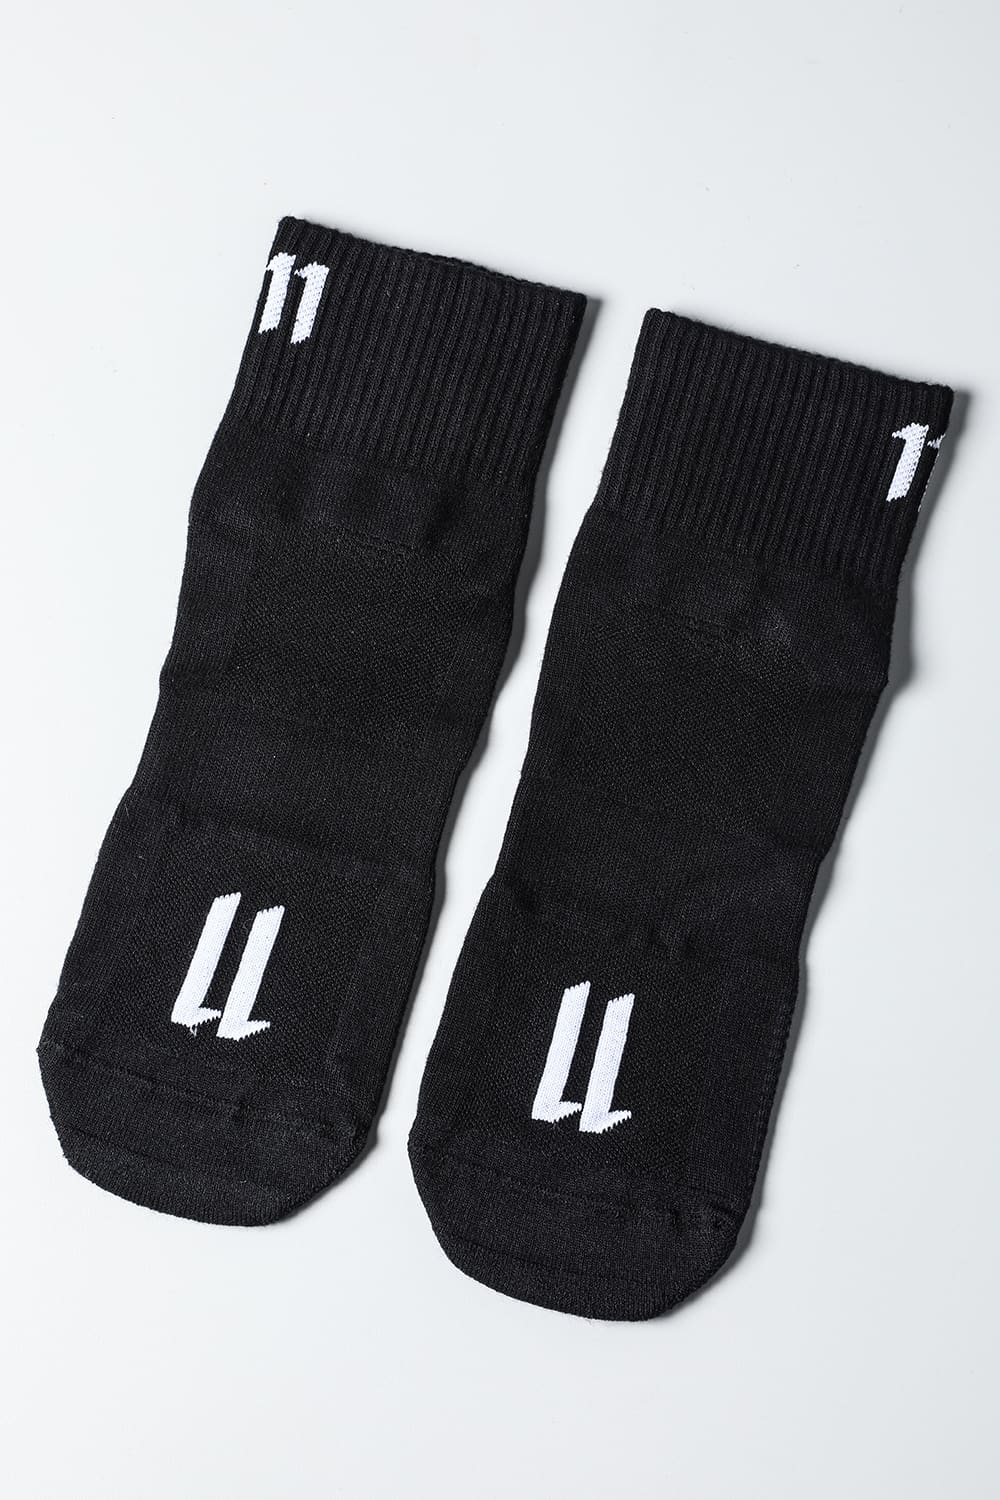  "11" Socks5 (3p)